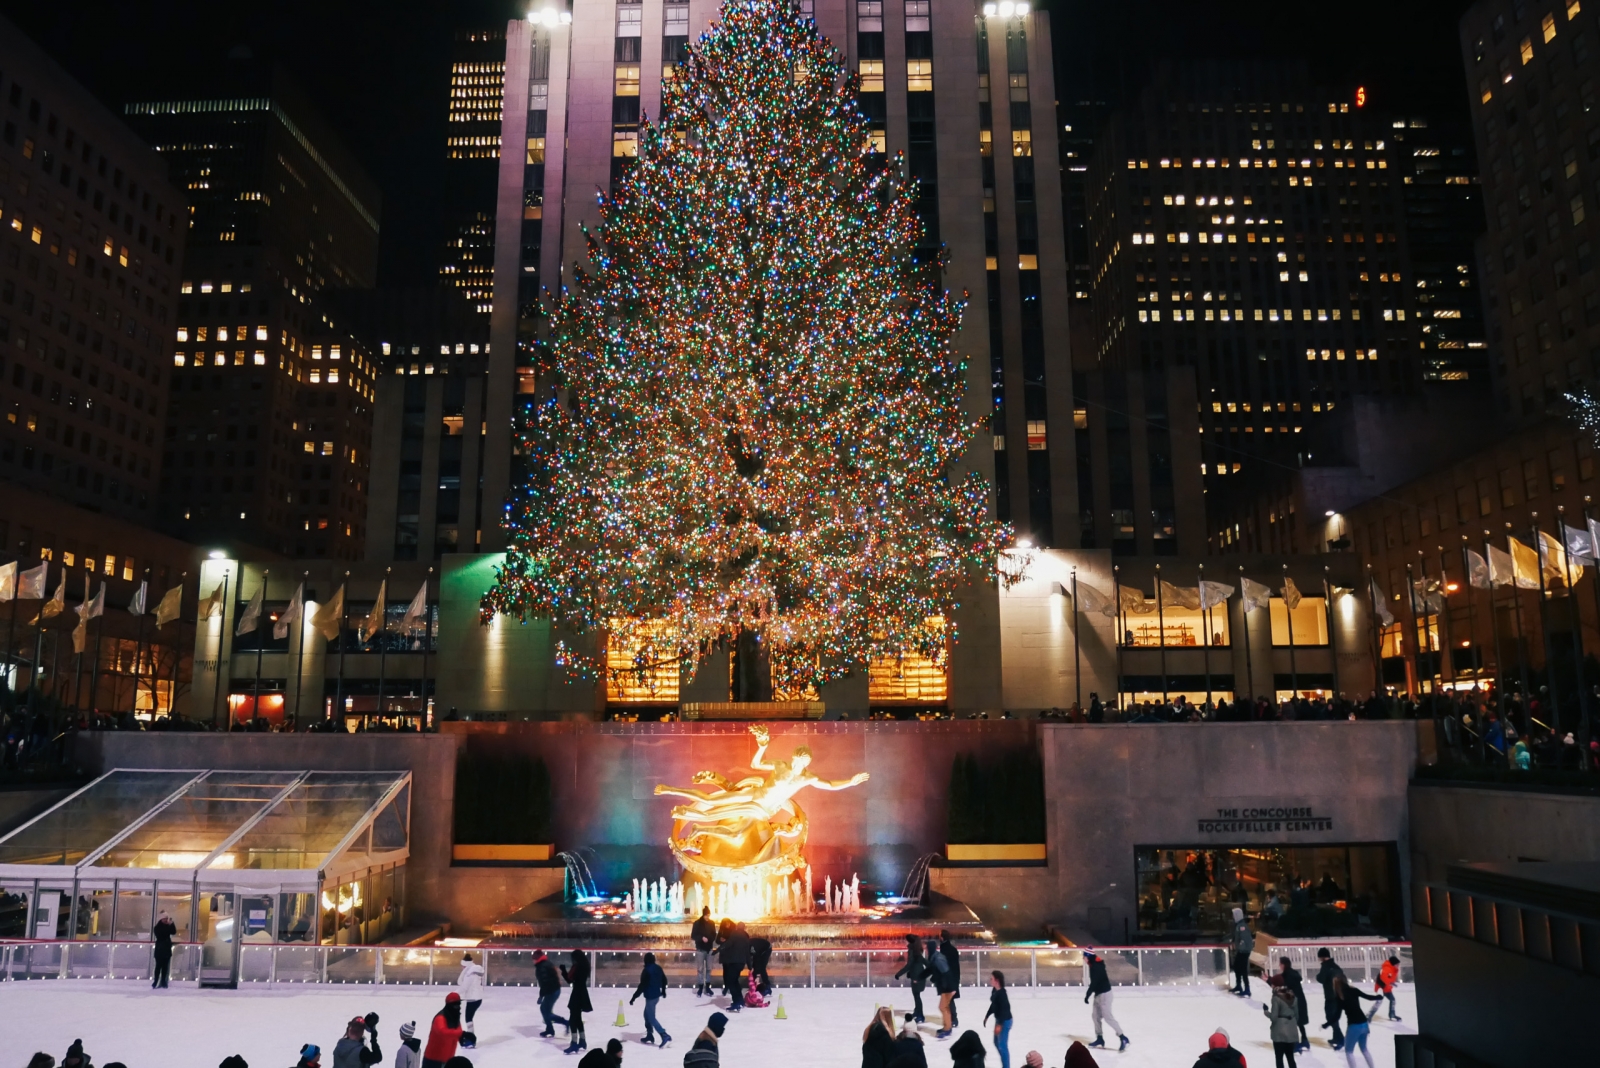 Rockefeller Center Christmas tree and skating rink